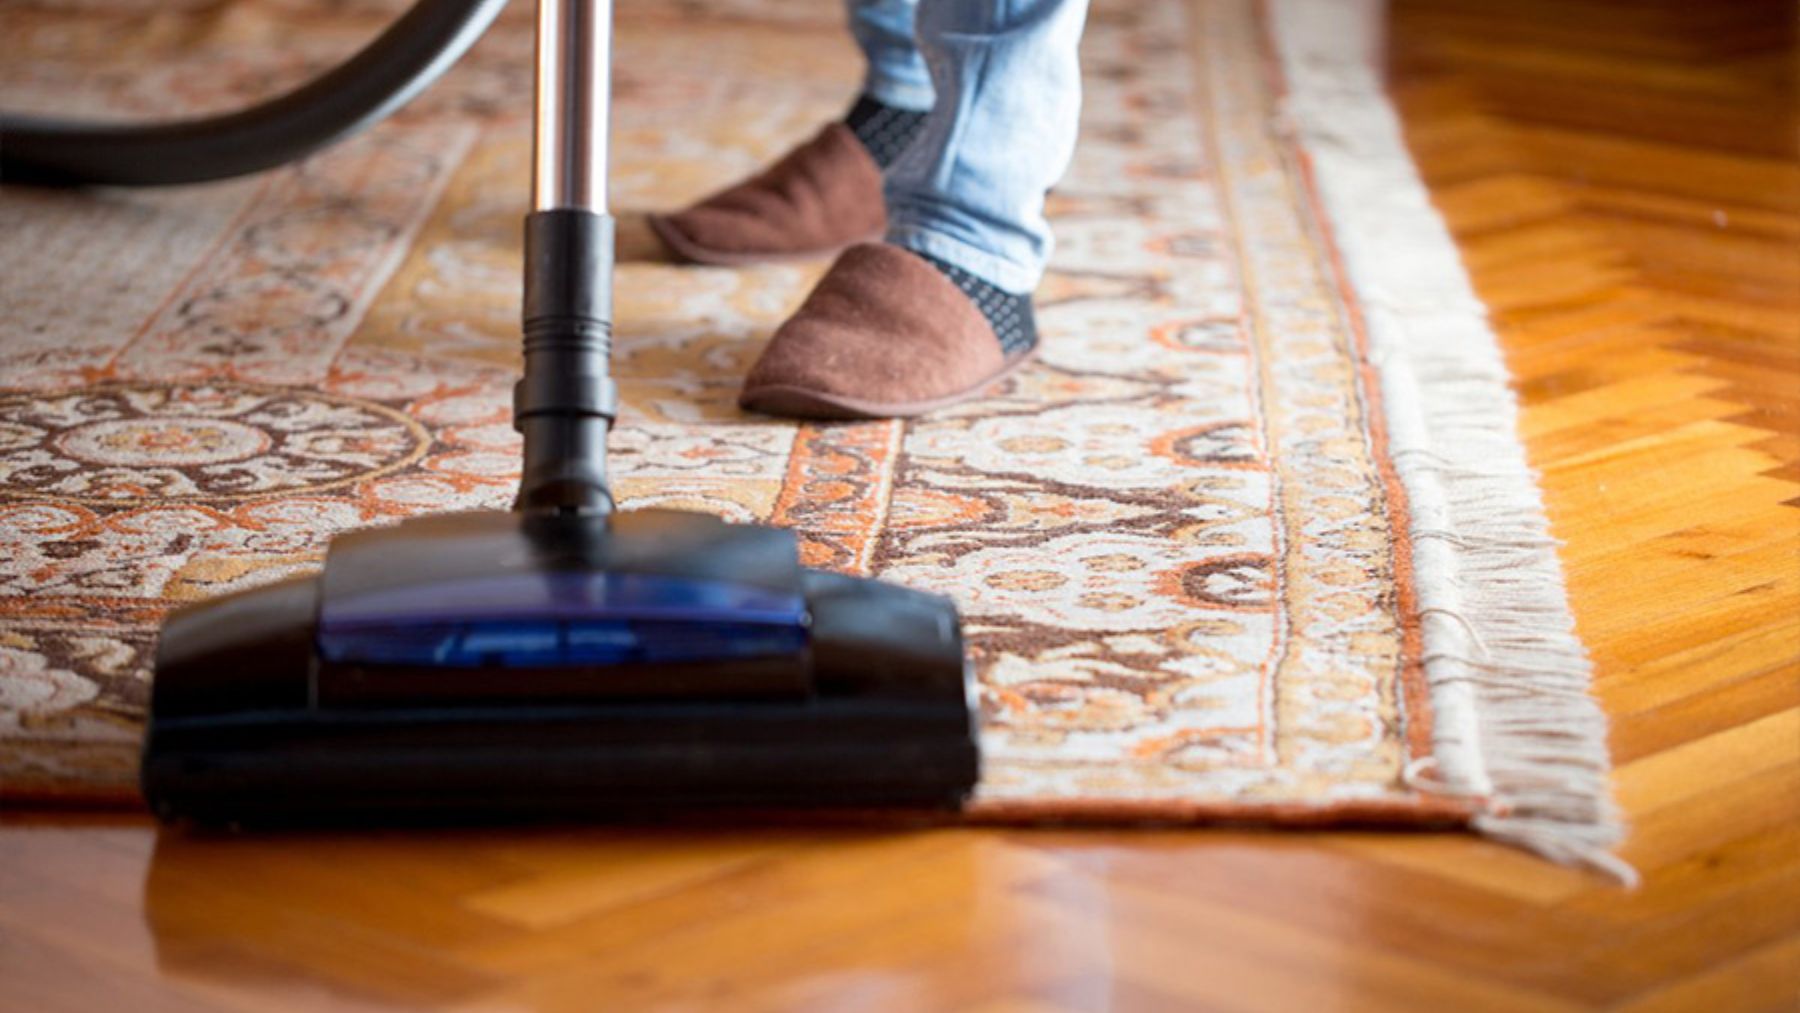 Descubre el método para limpiar la alfombra en casa de manera natural